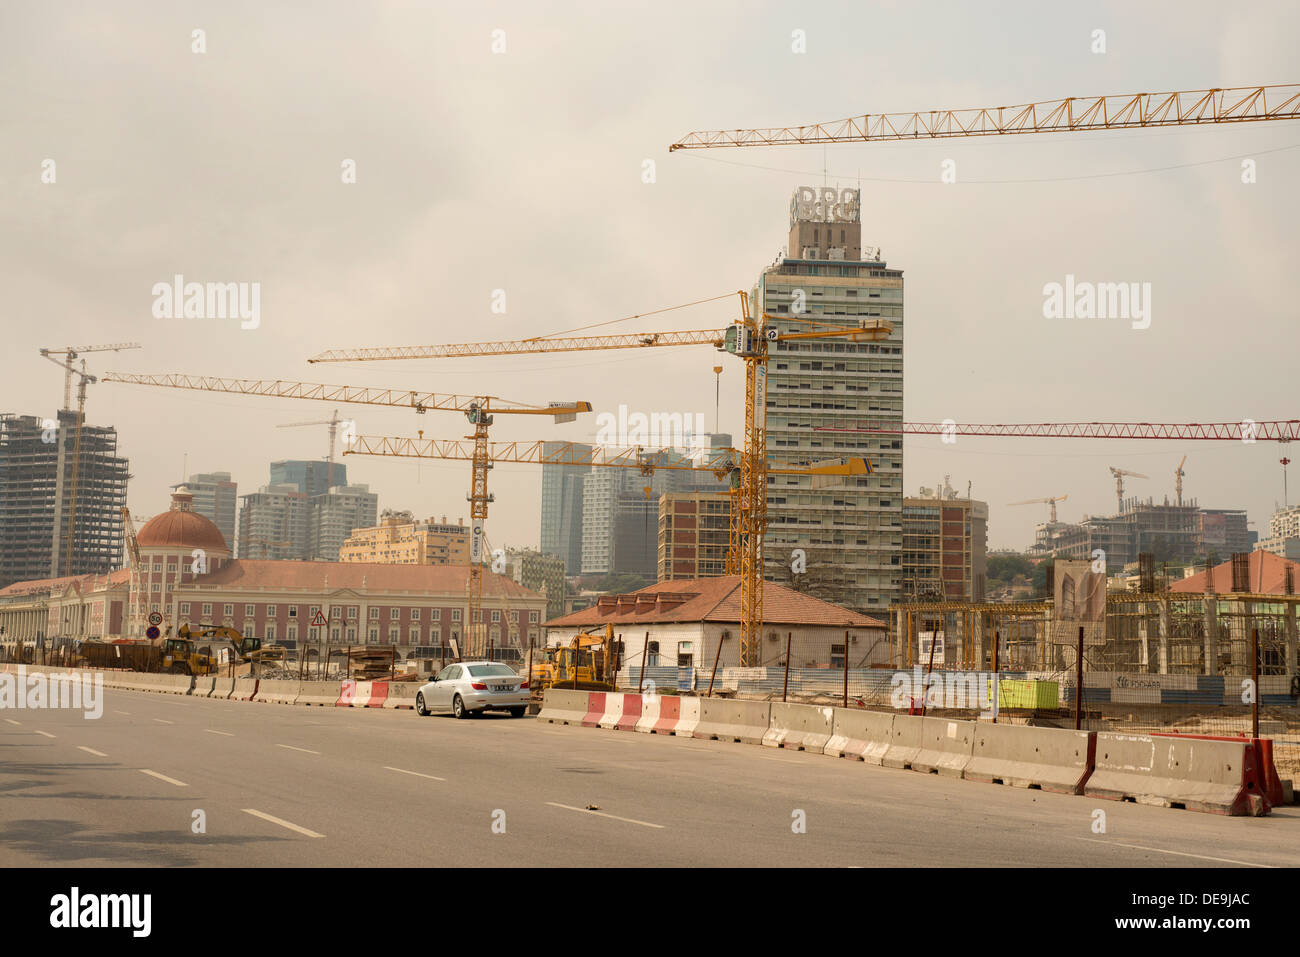 Construction boom, Luanda, Angola Stock Photo